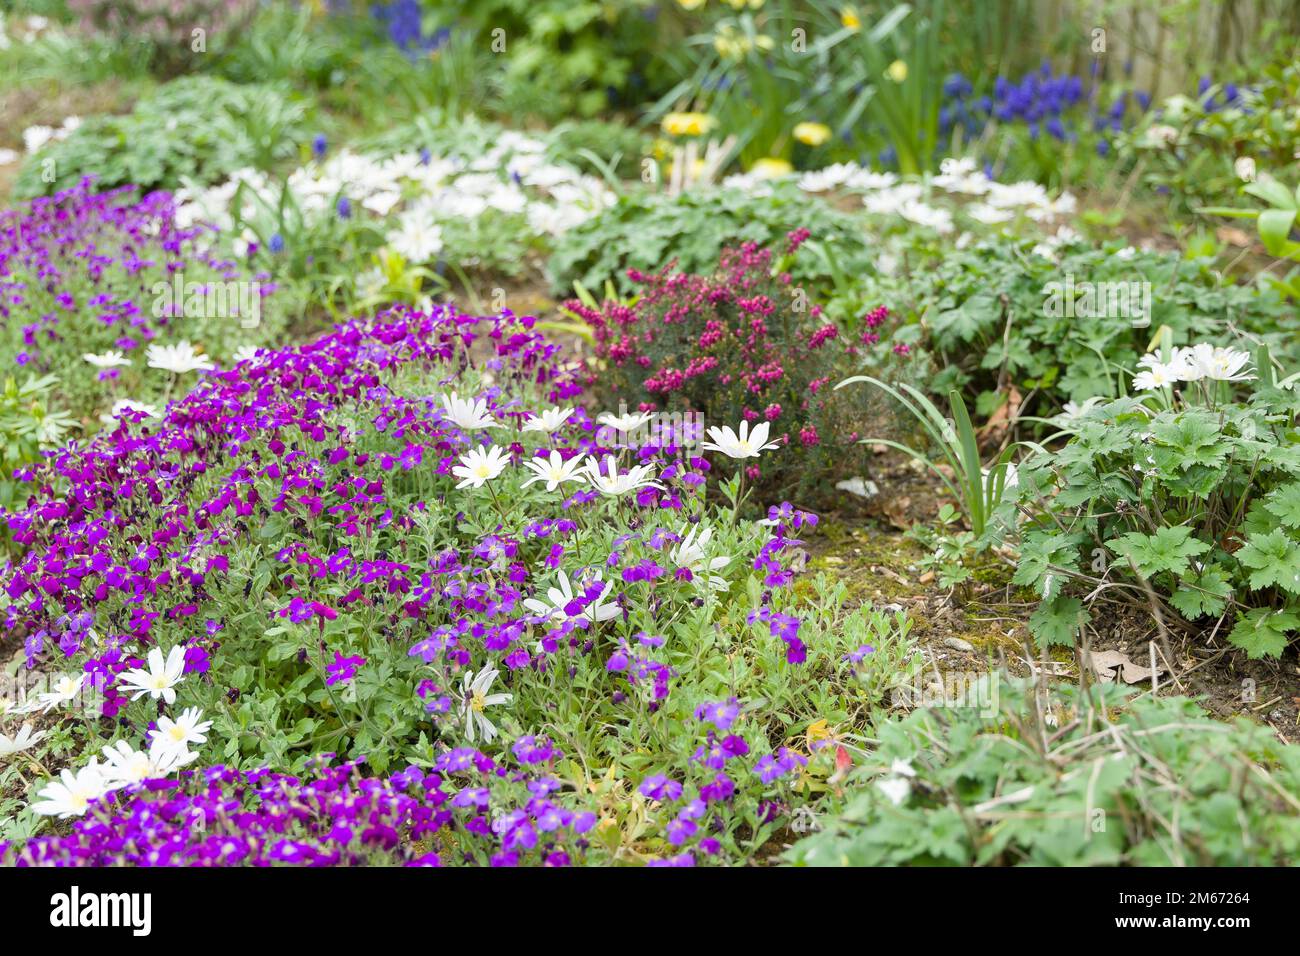 Aubrieta (aubretia) and anemone blanda flowers, perennial plants in bloom in a UK garden flower bed in spring. Stock Photo